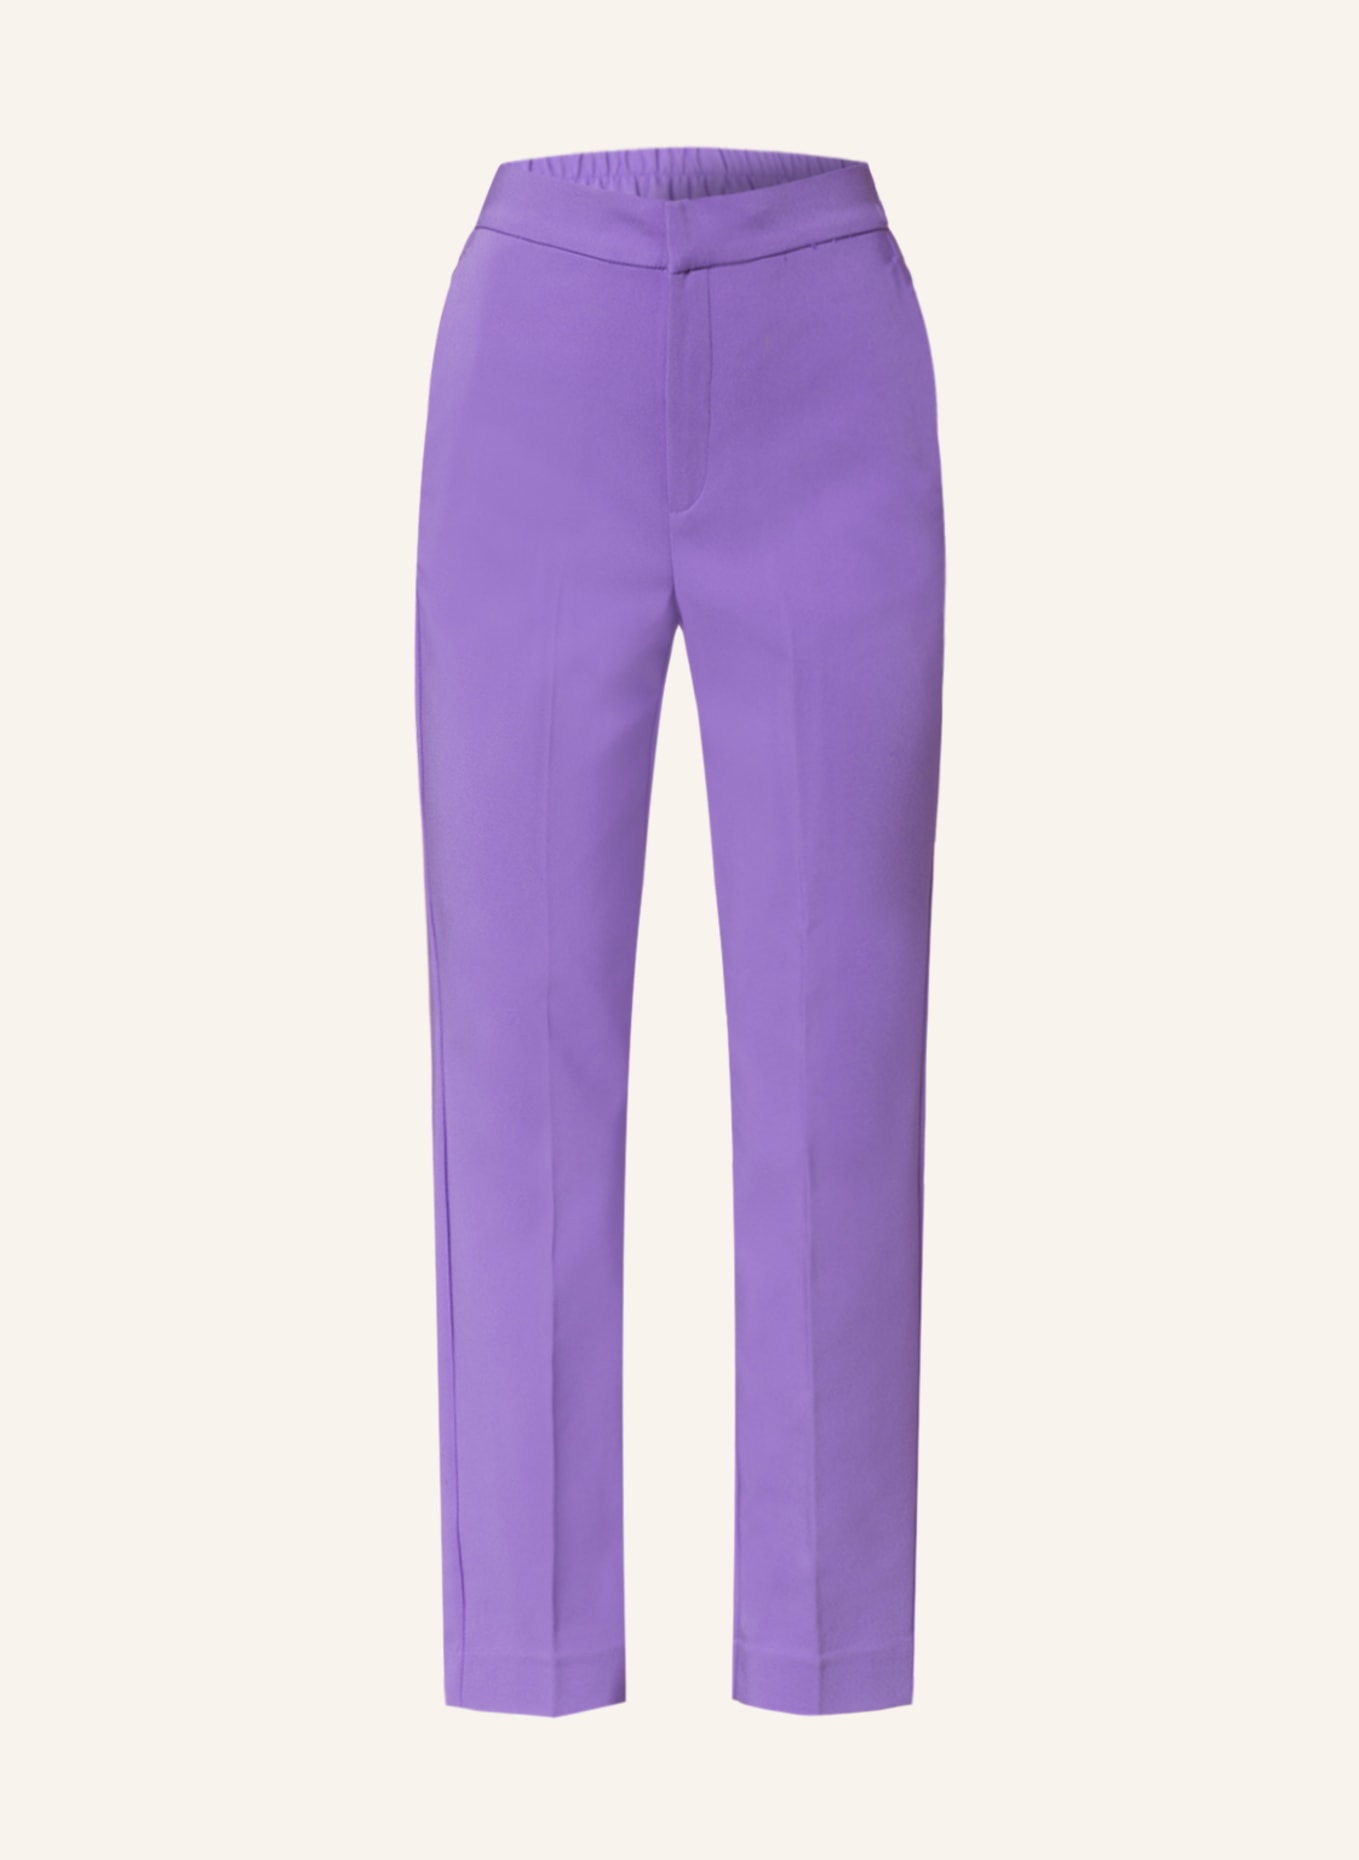 Zella, Pants & Jumpsuits, Zella Purple Black Leggings Size Small